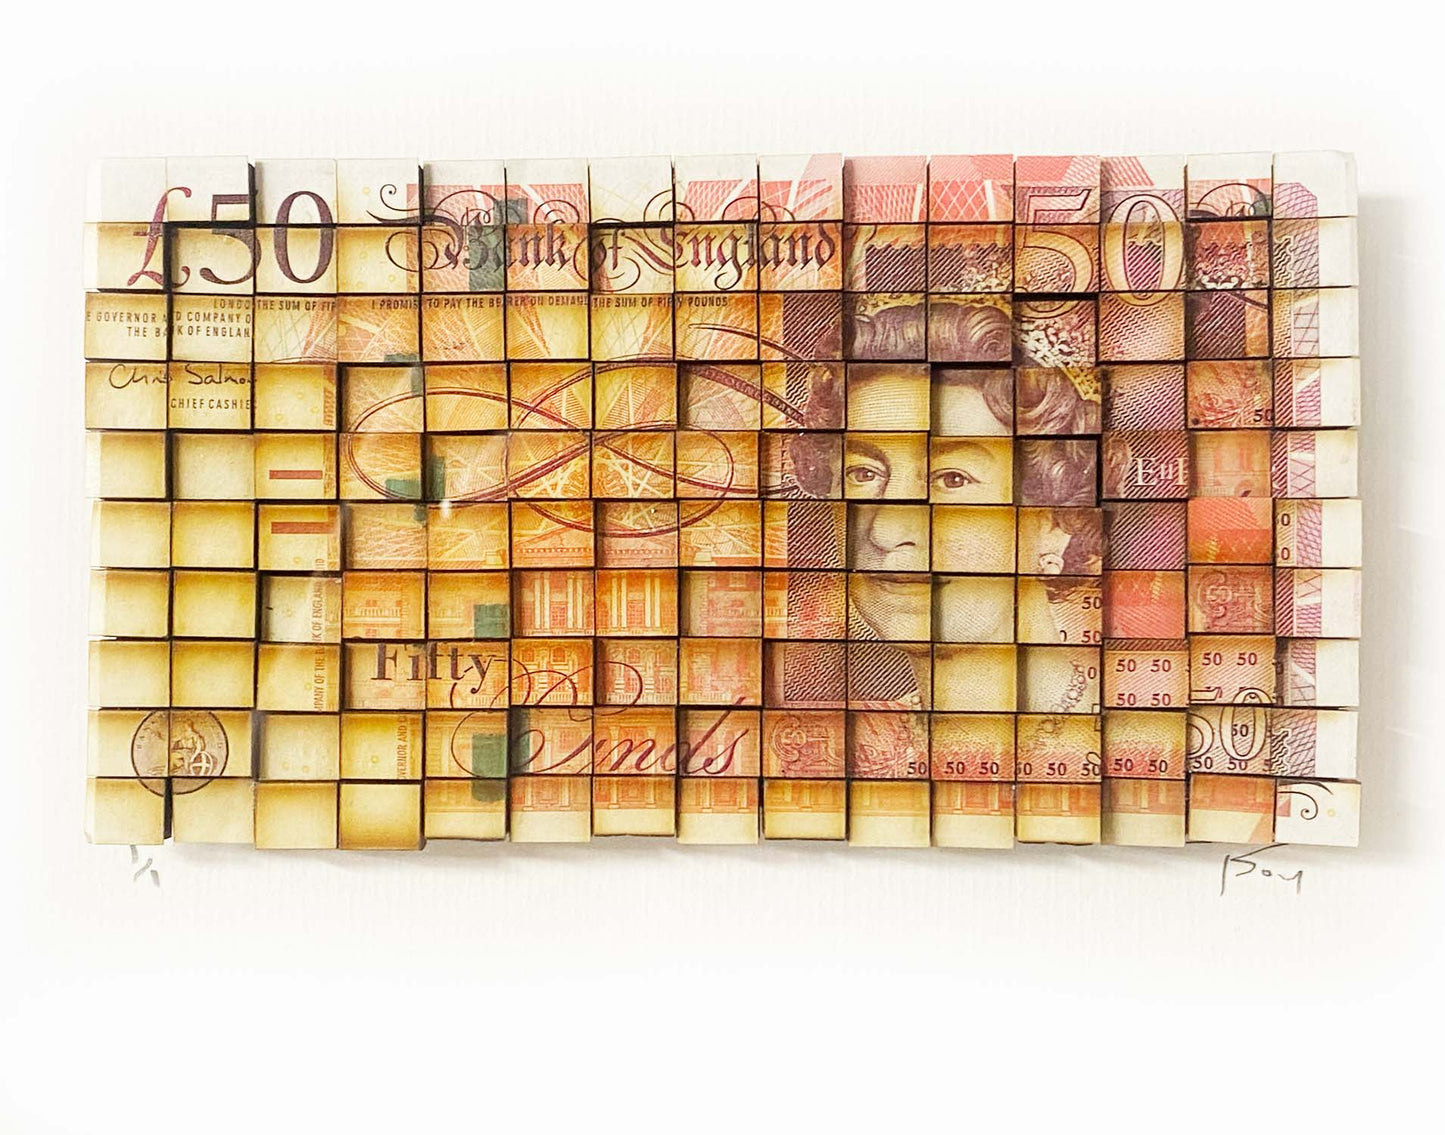 Digital currency £50 edition of 1 - Smolensky Gallery